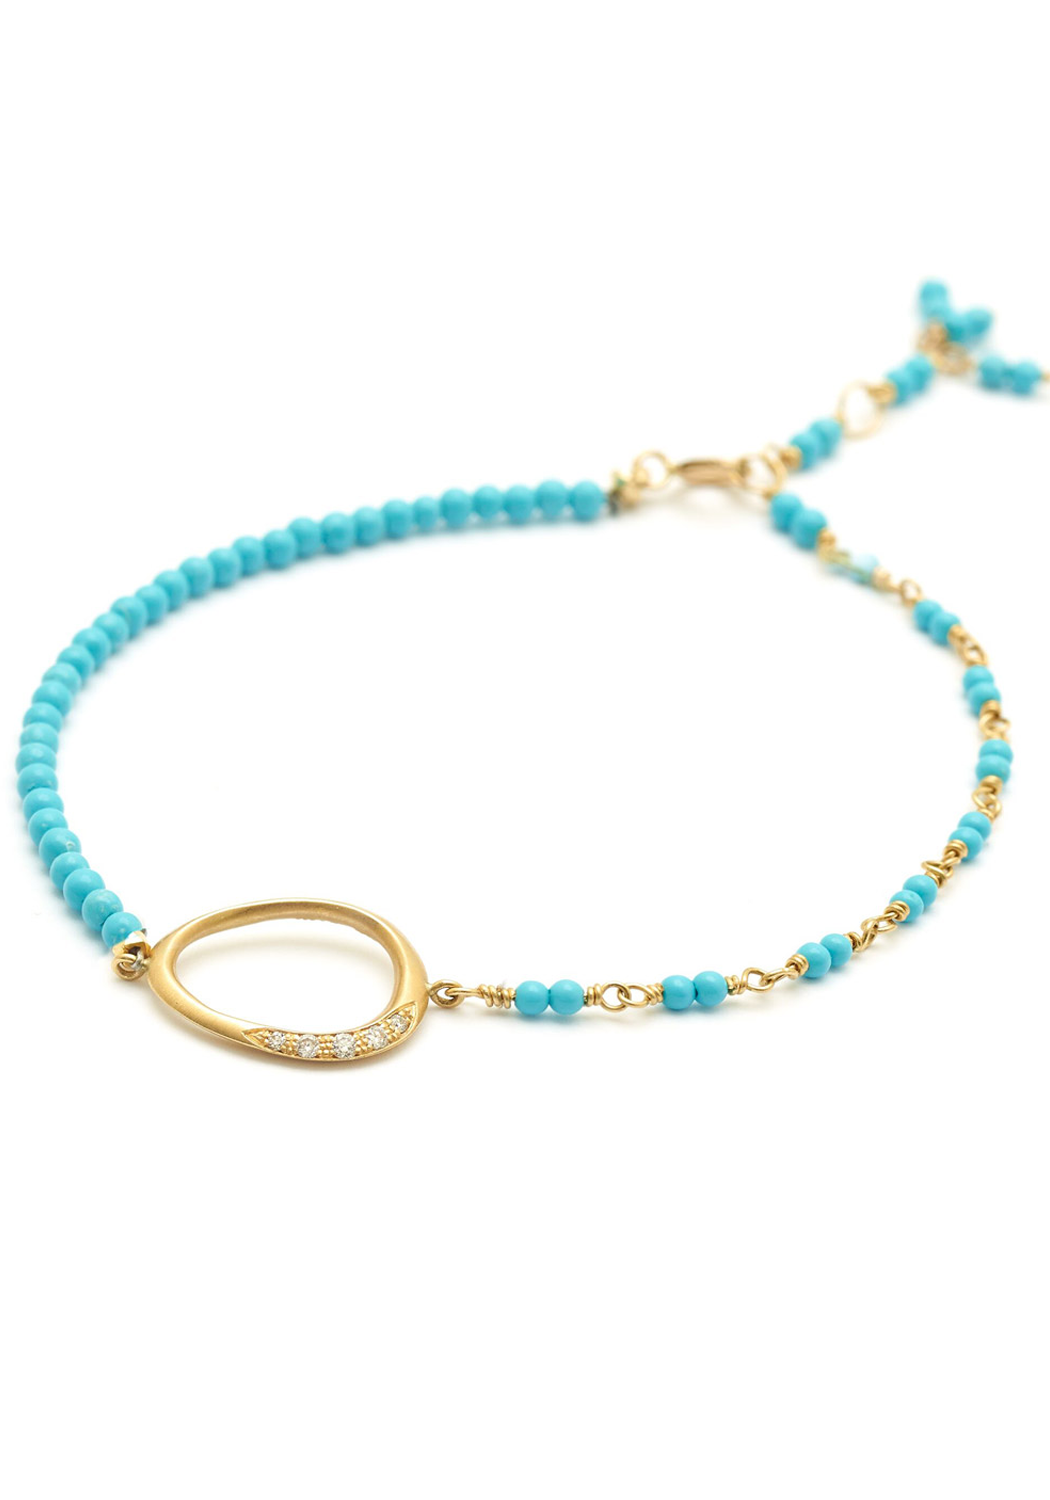 Anne Sportun 18KYG Diamond Flow Turquoise Bead Bracelet | Ref. B196Gd5-Turq | OsterJewelers.com